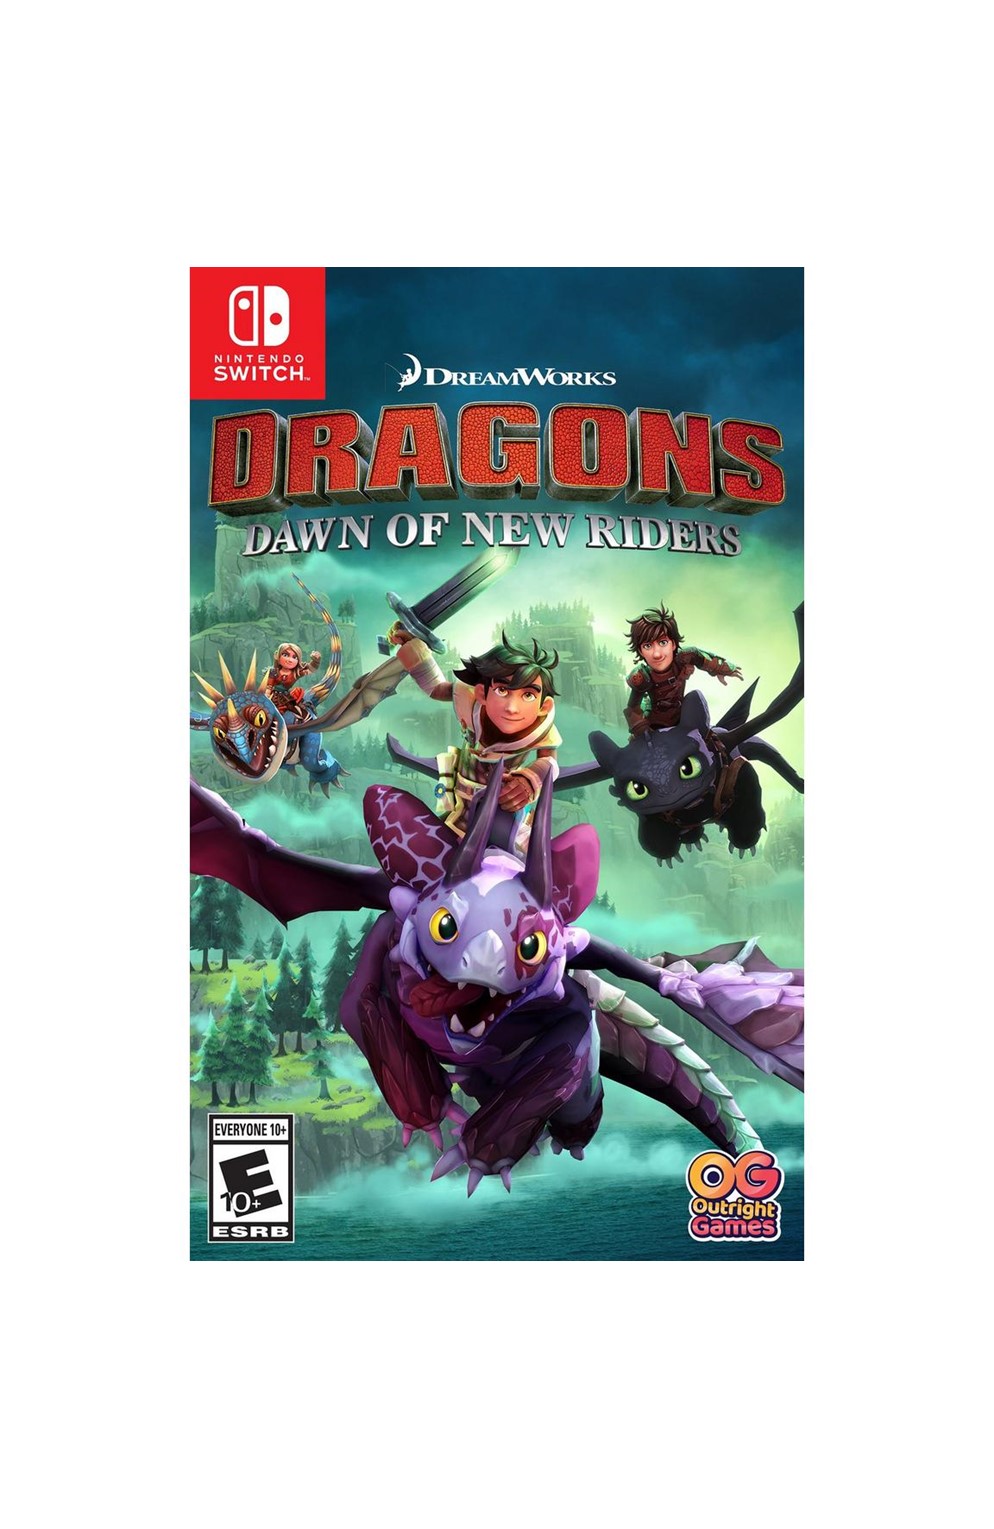 Nintendo Switch Dreamworks Dragons Dawn of New Riders